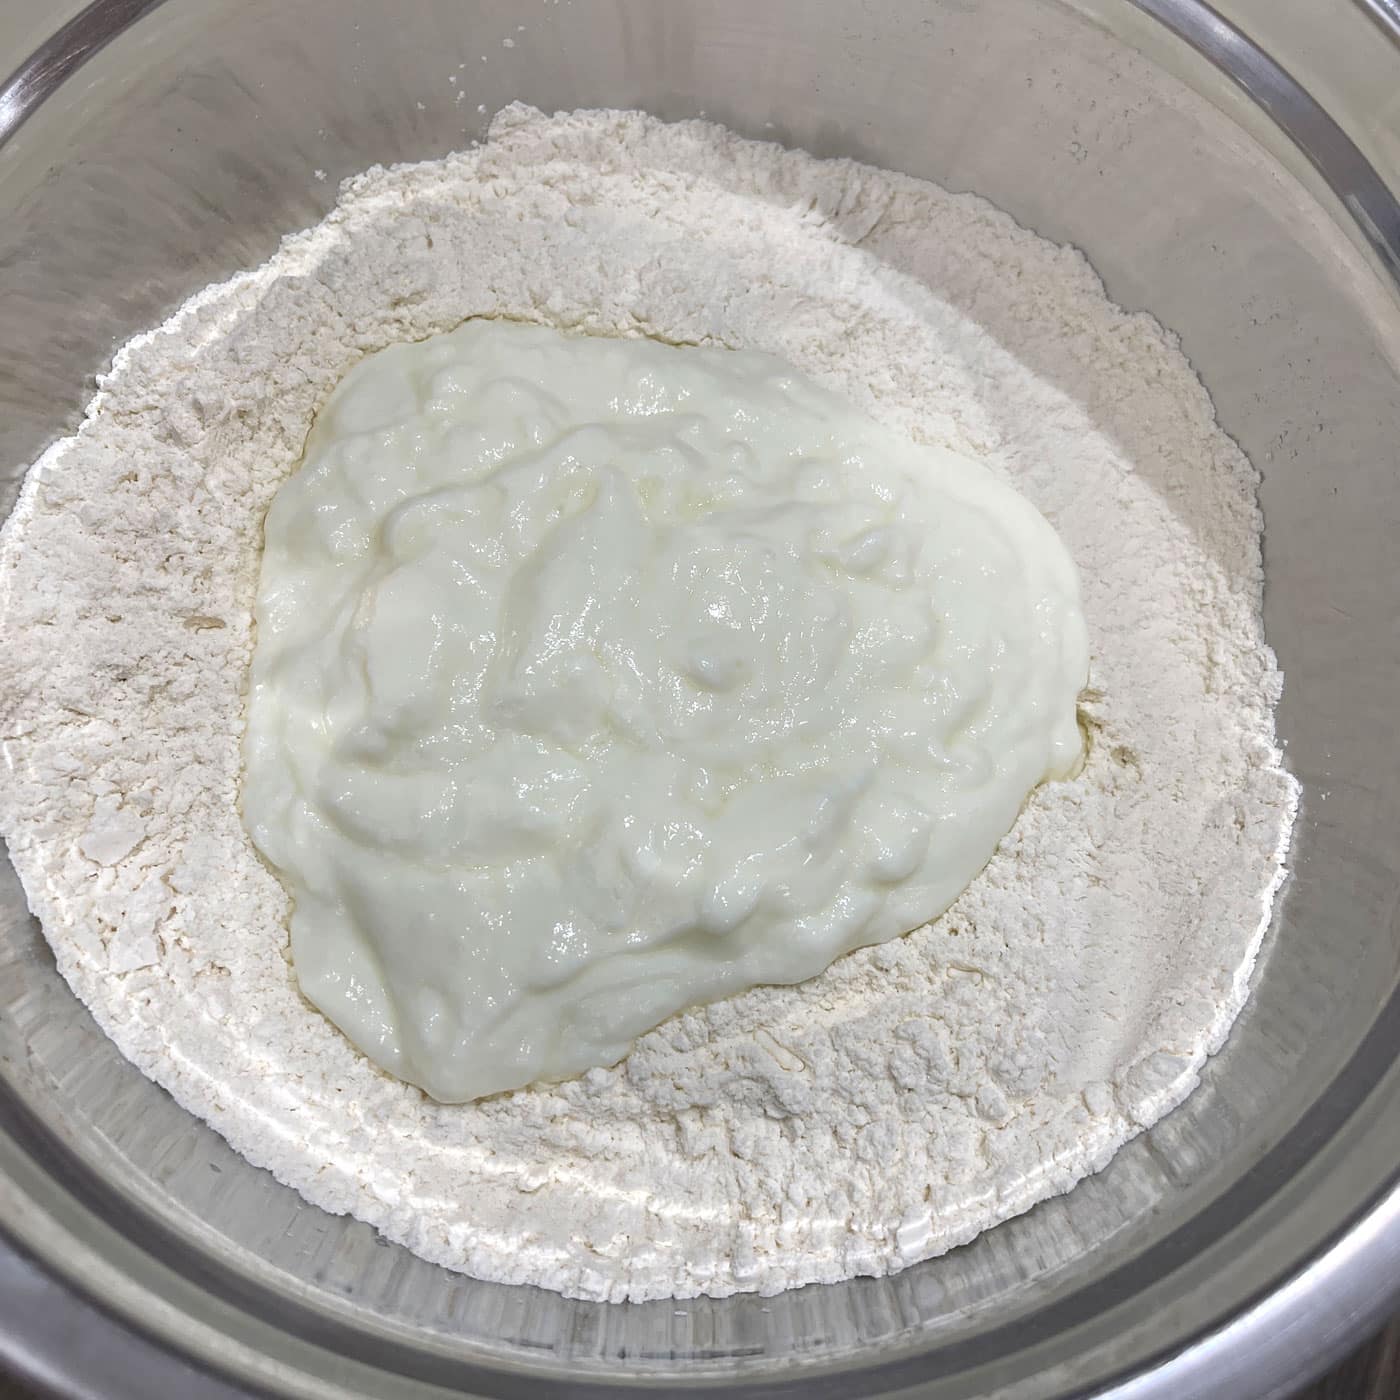 yogurt added to flour mixture